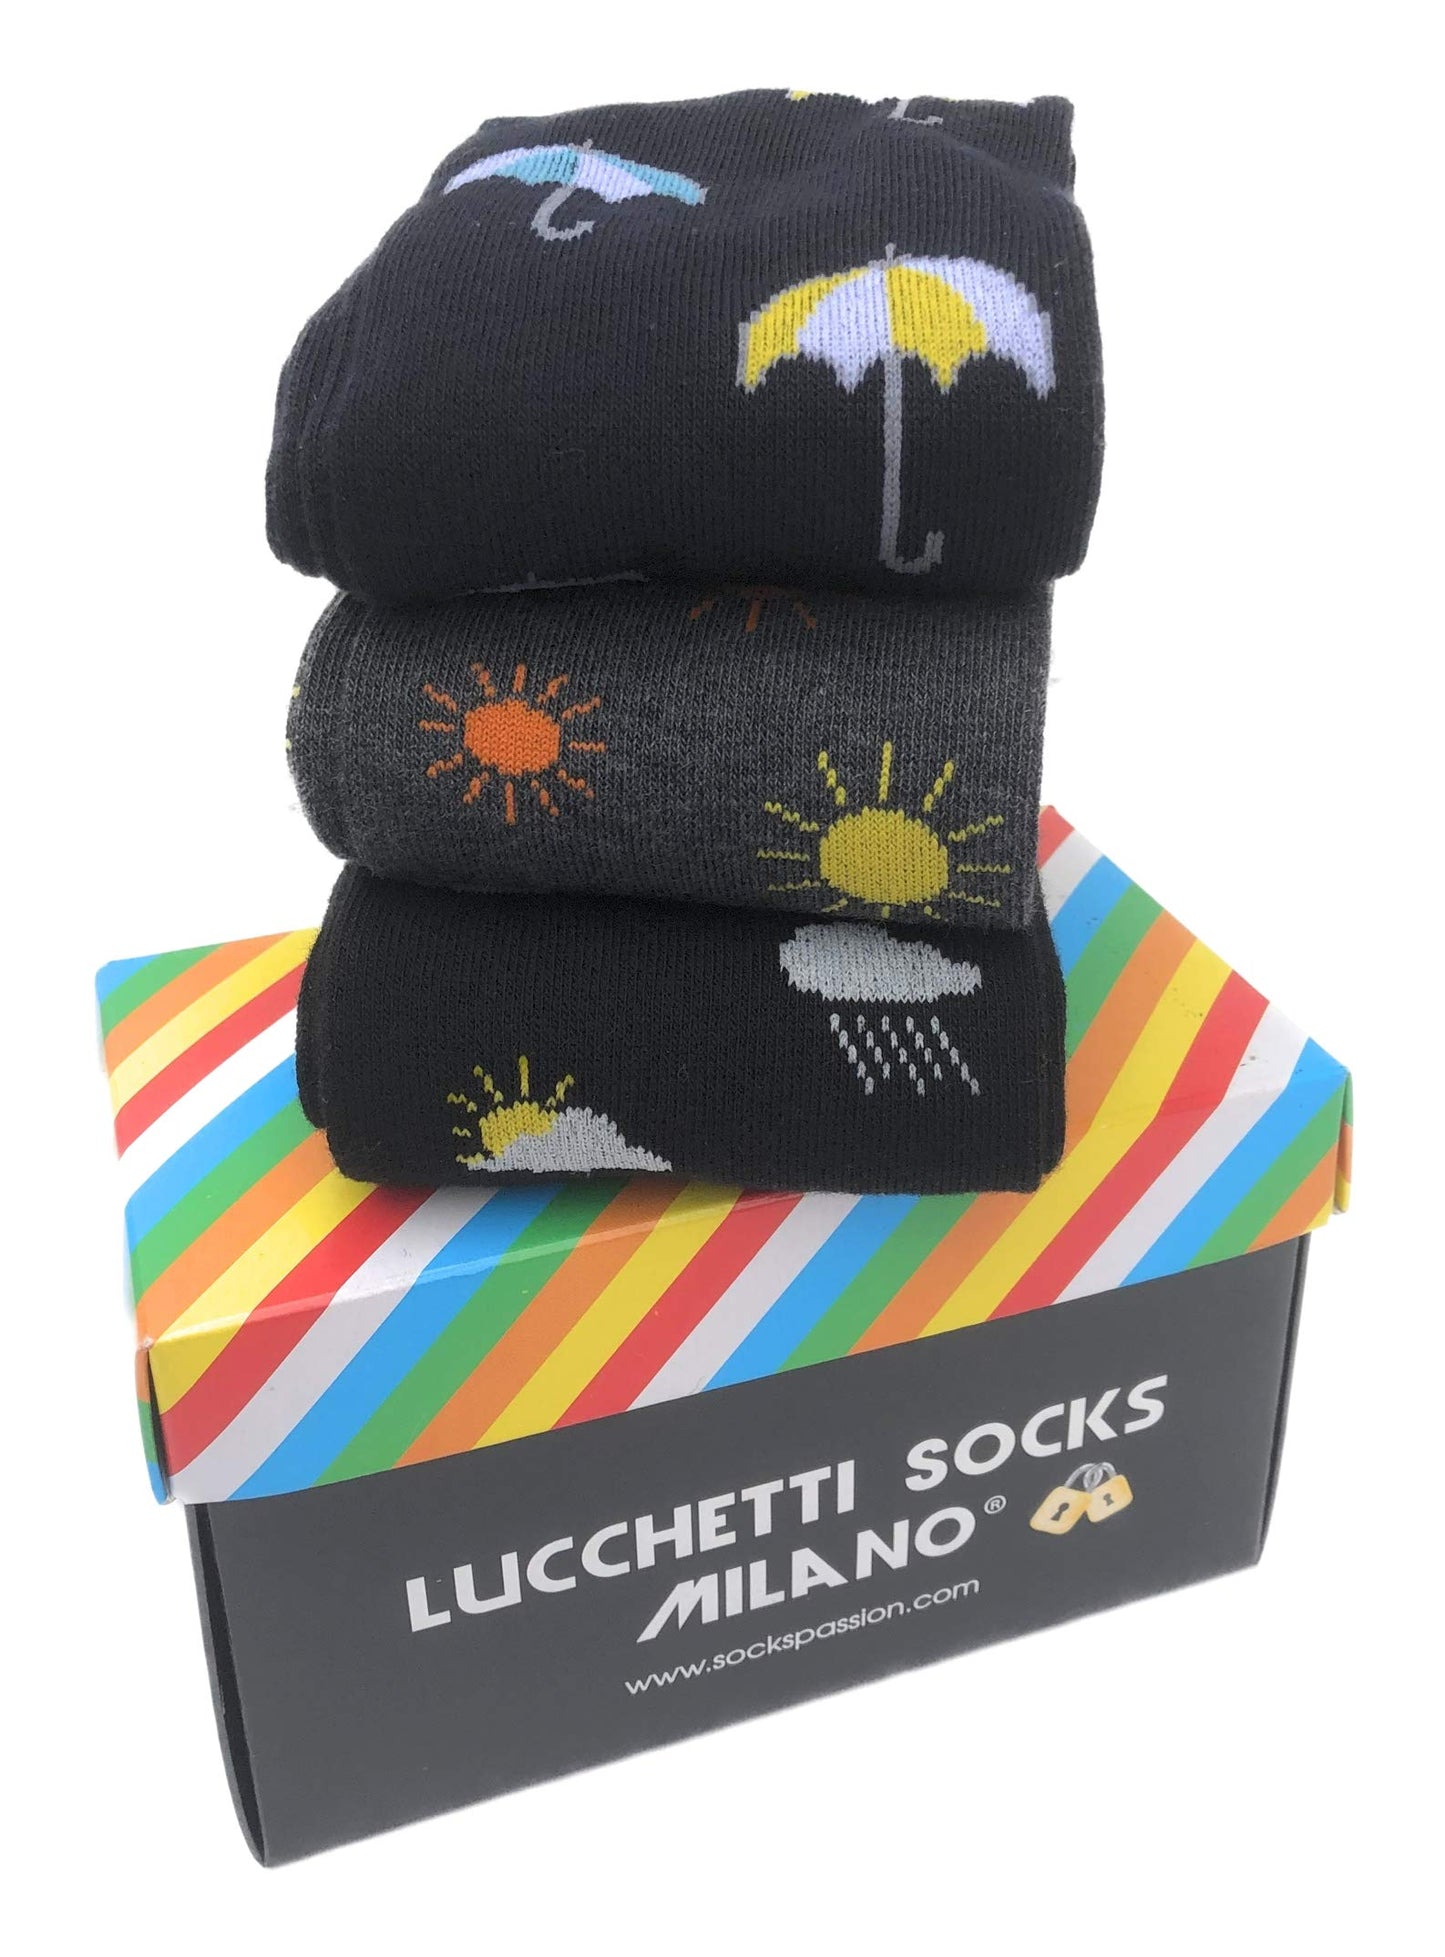 Lucchetti Socks Milano SET 3 PAIA DI CALZE UOMO LUNGHE CALDO COTONE COLORATE TENDENZA POIS FANTASIA FASHION MADE IN ITALY (SET METEO EST)